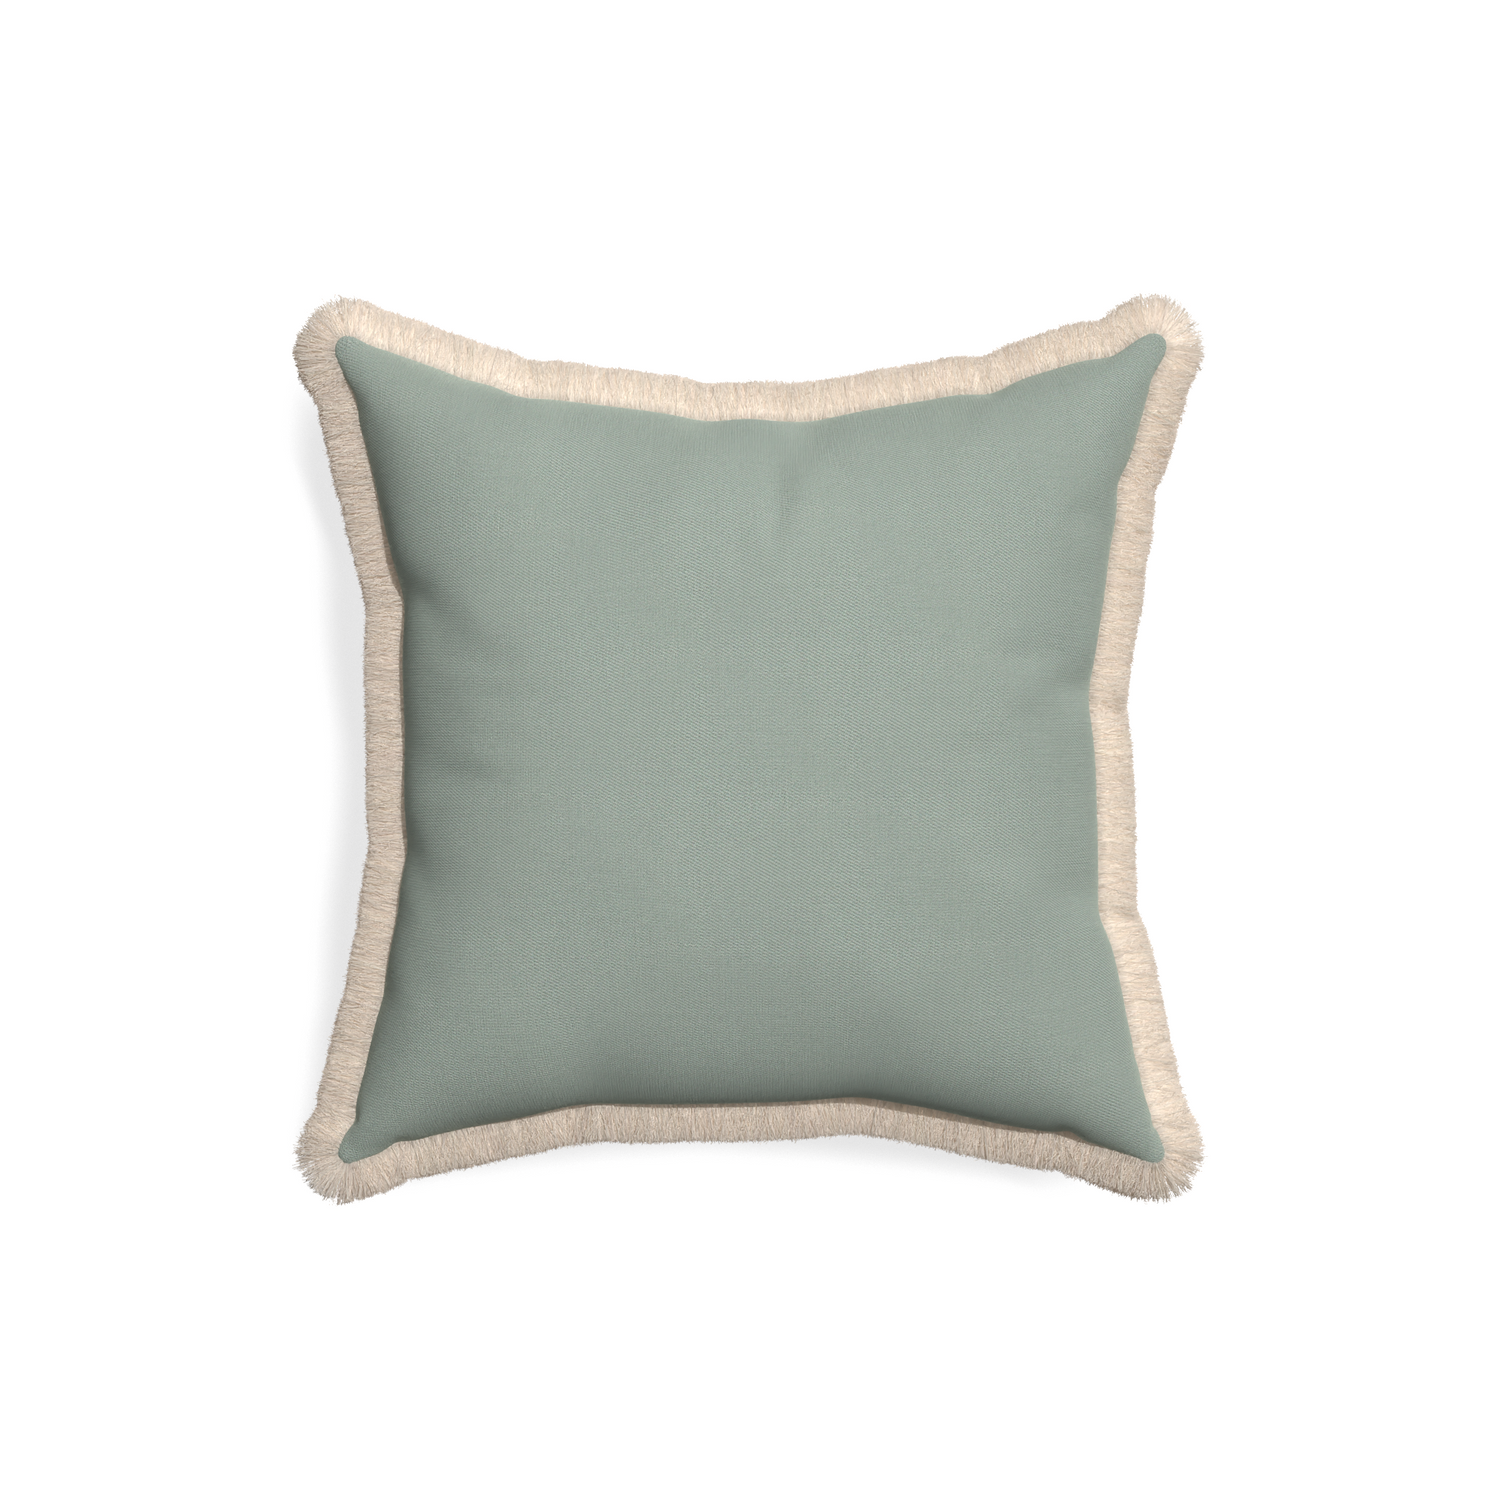 18-square sage custom pillow with cream fringe on white background